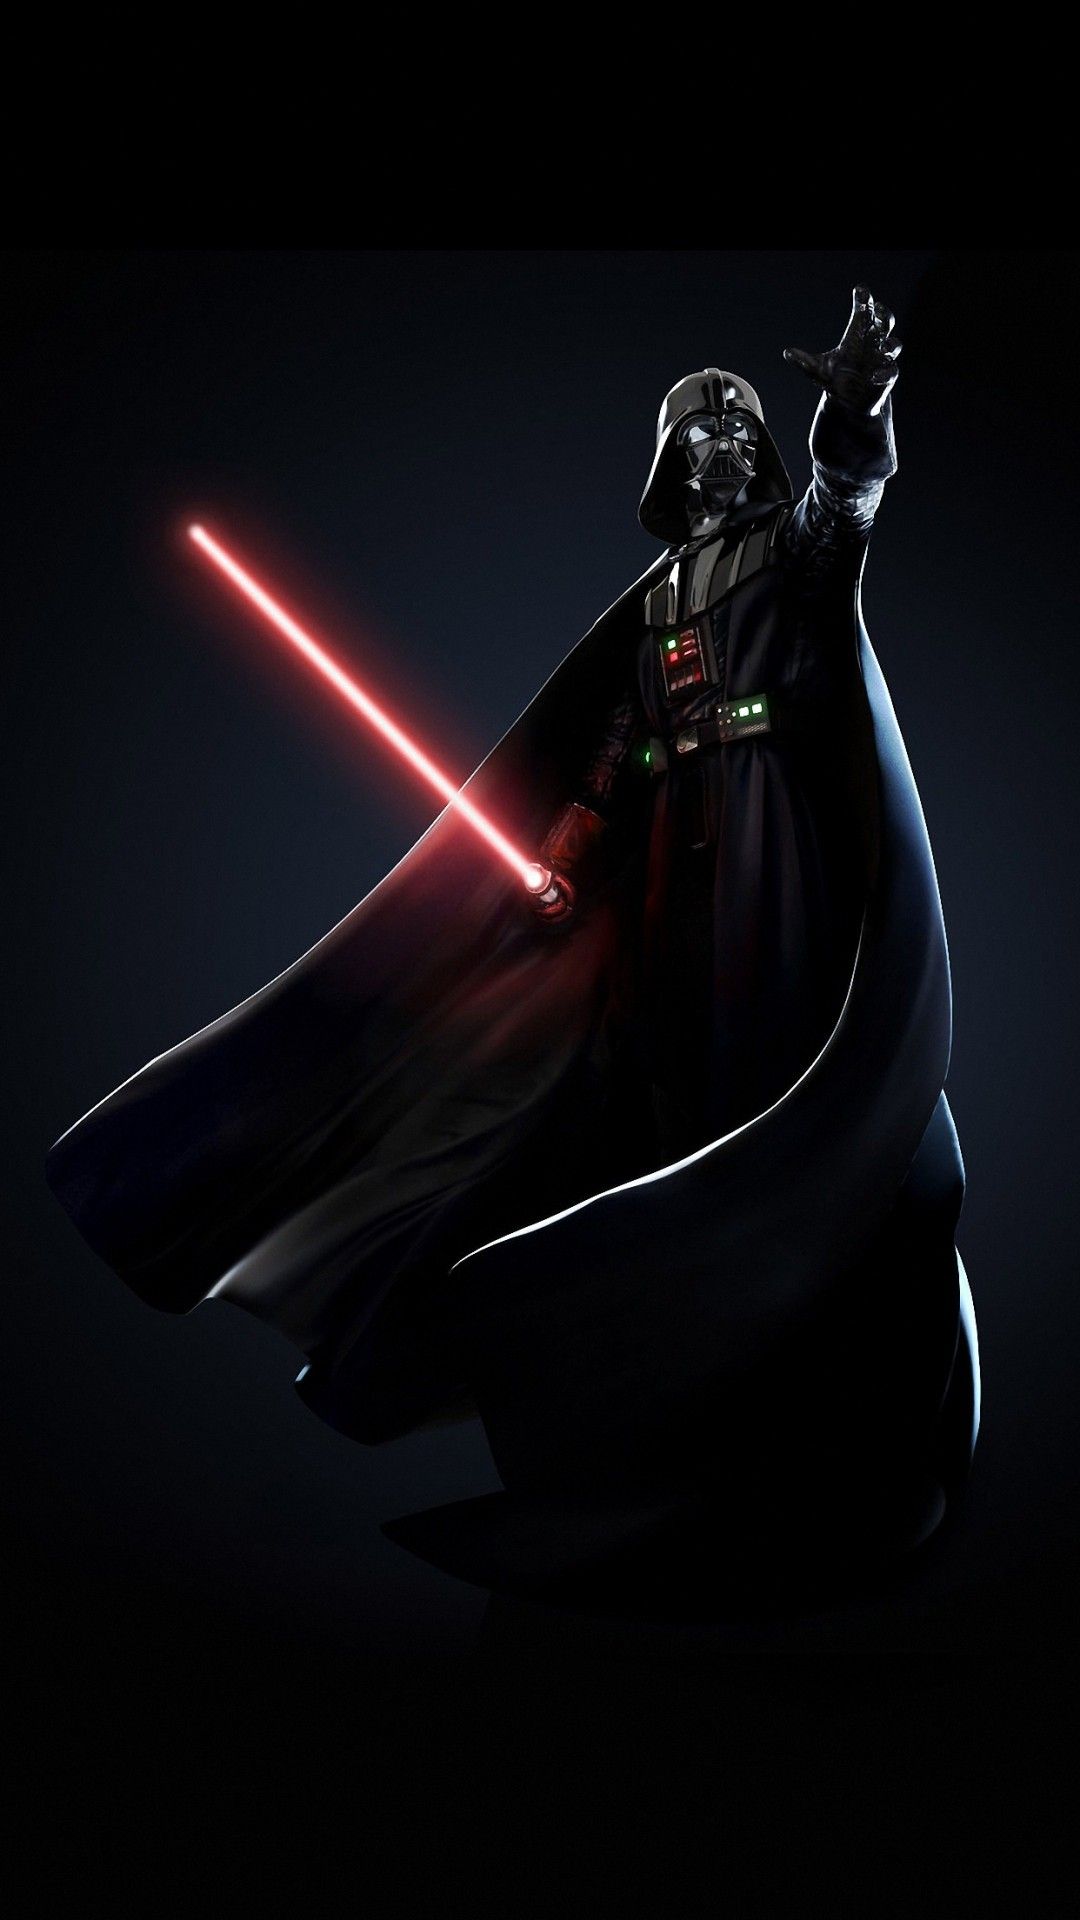 4K wallpaper: Darth Vader Wallpaper For iPhone 6